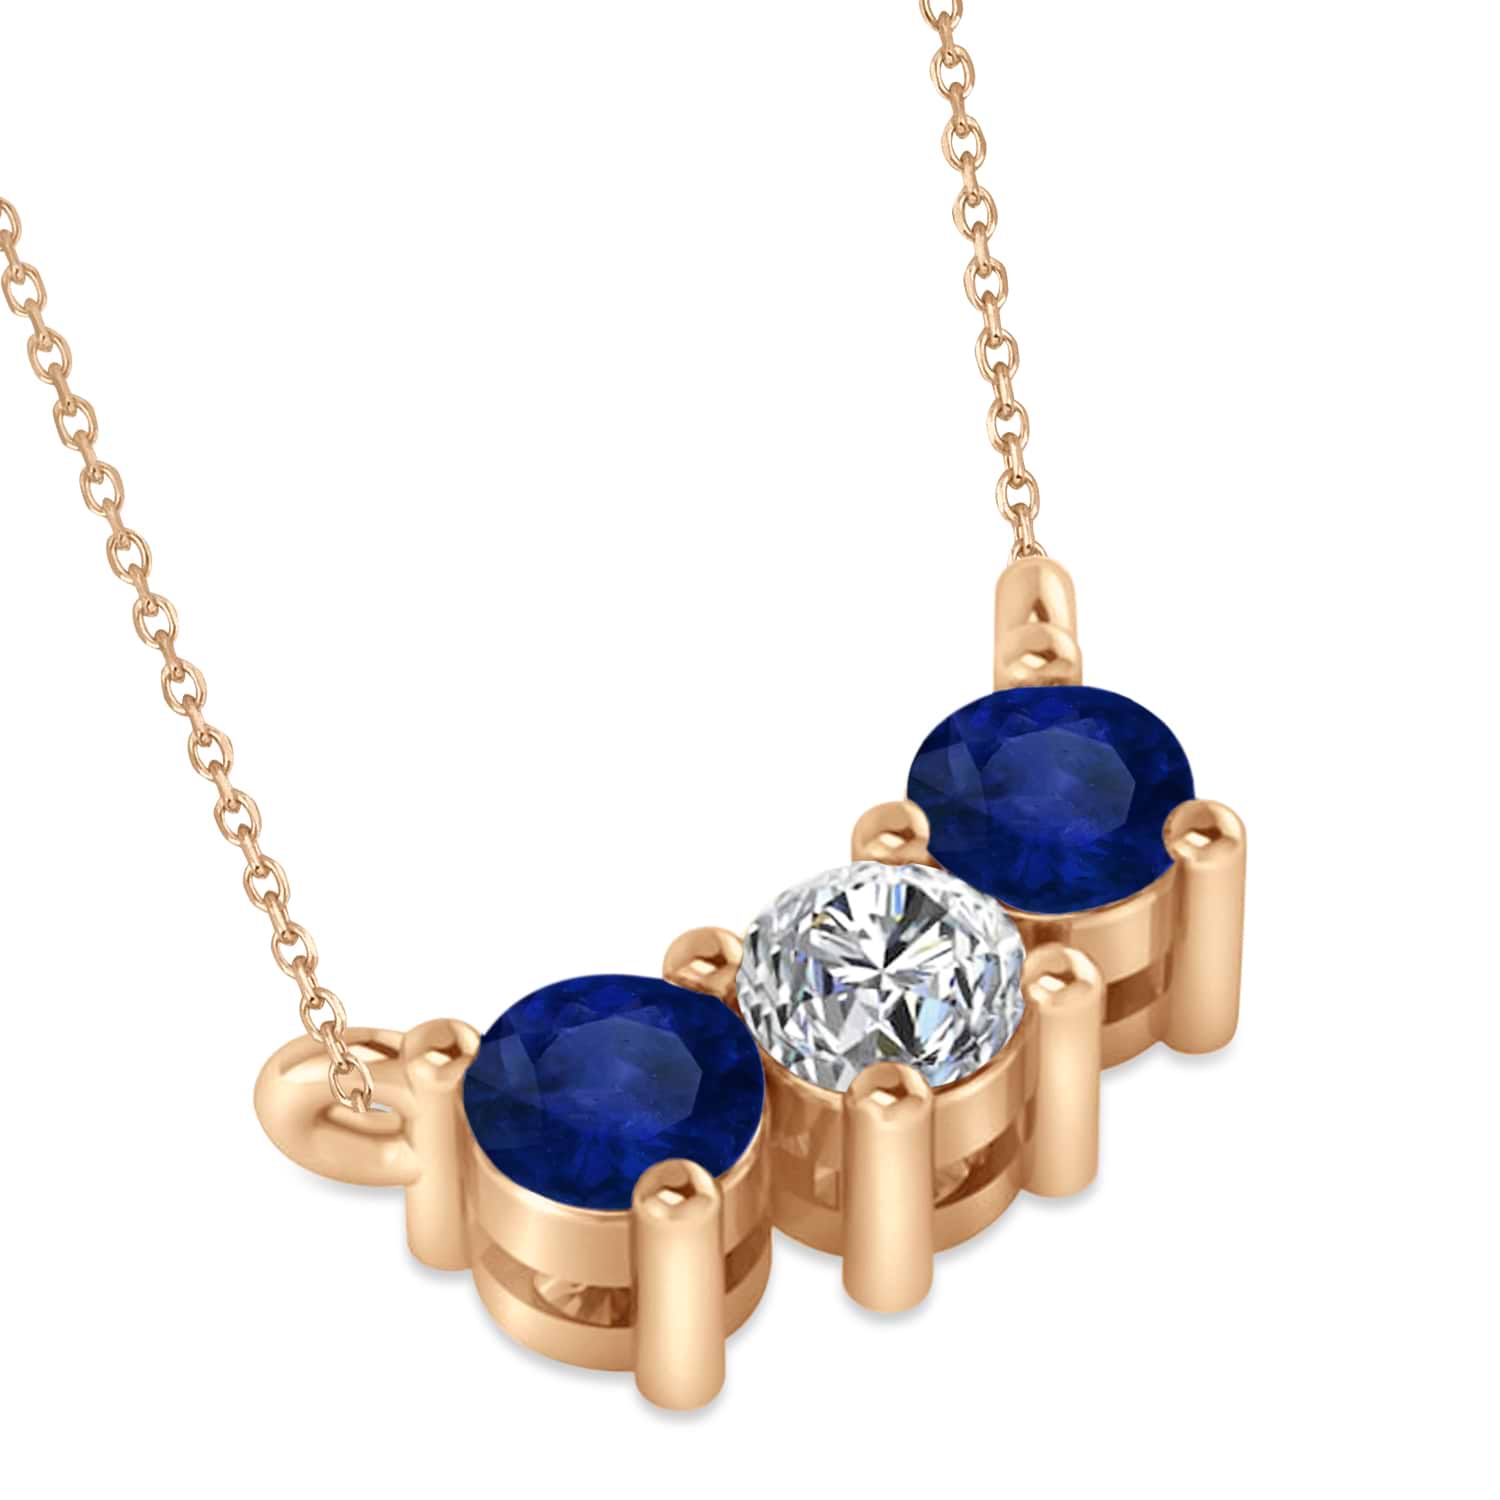 Three Stone Diamond & Blue Sapphire Pendant Necklace 14k Rose Gold (0.45ct)